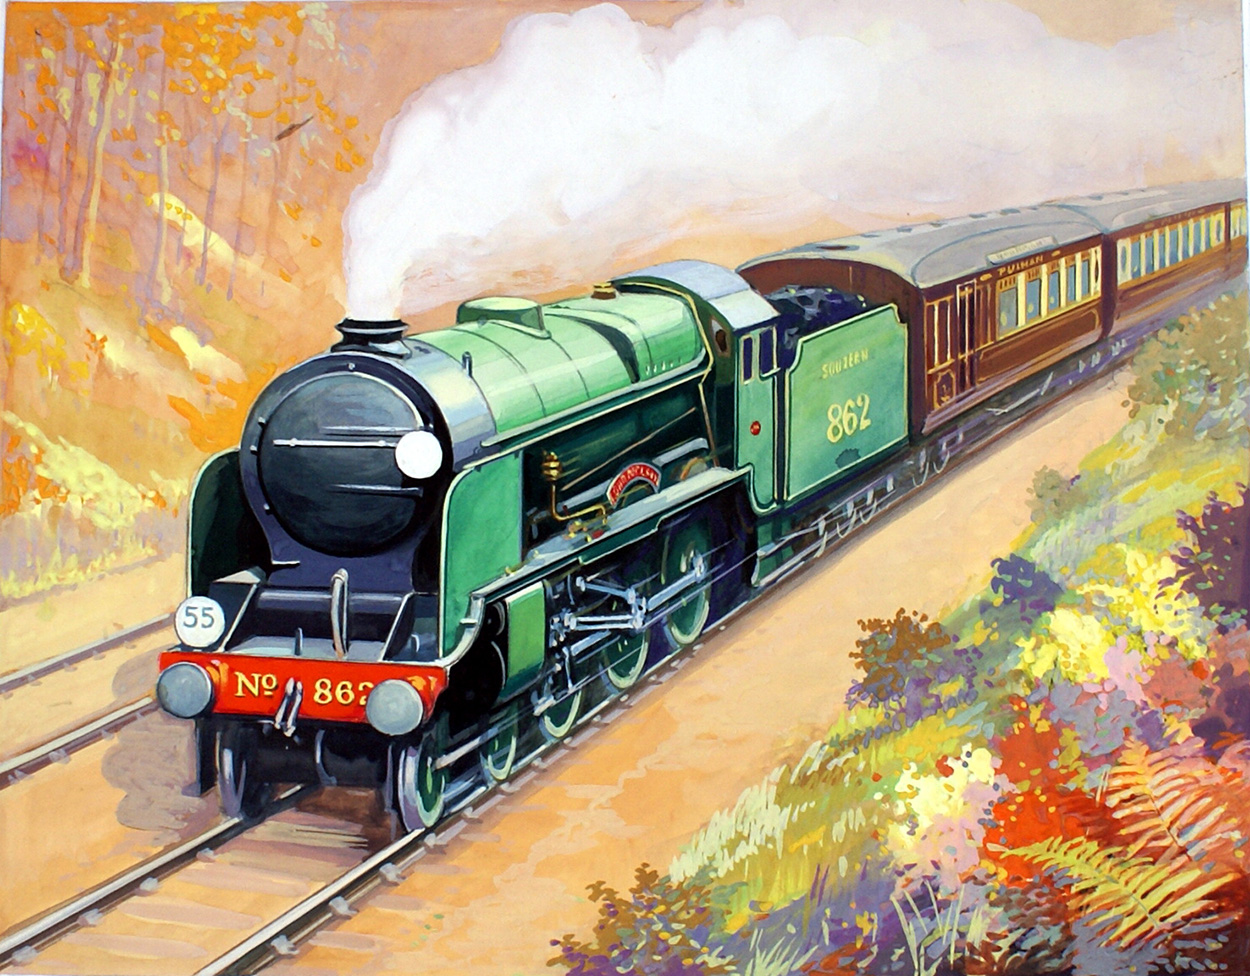 Southern Region Steam Engine no.862 (Original) art by Geoffrey Day at The Illustration Art Gallery